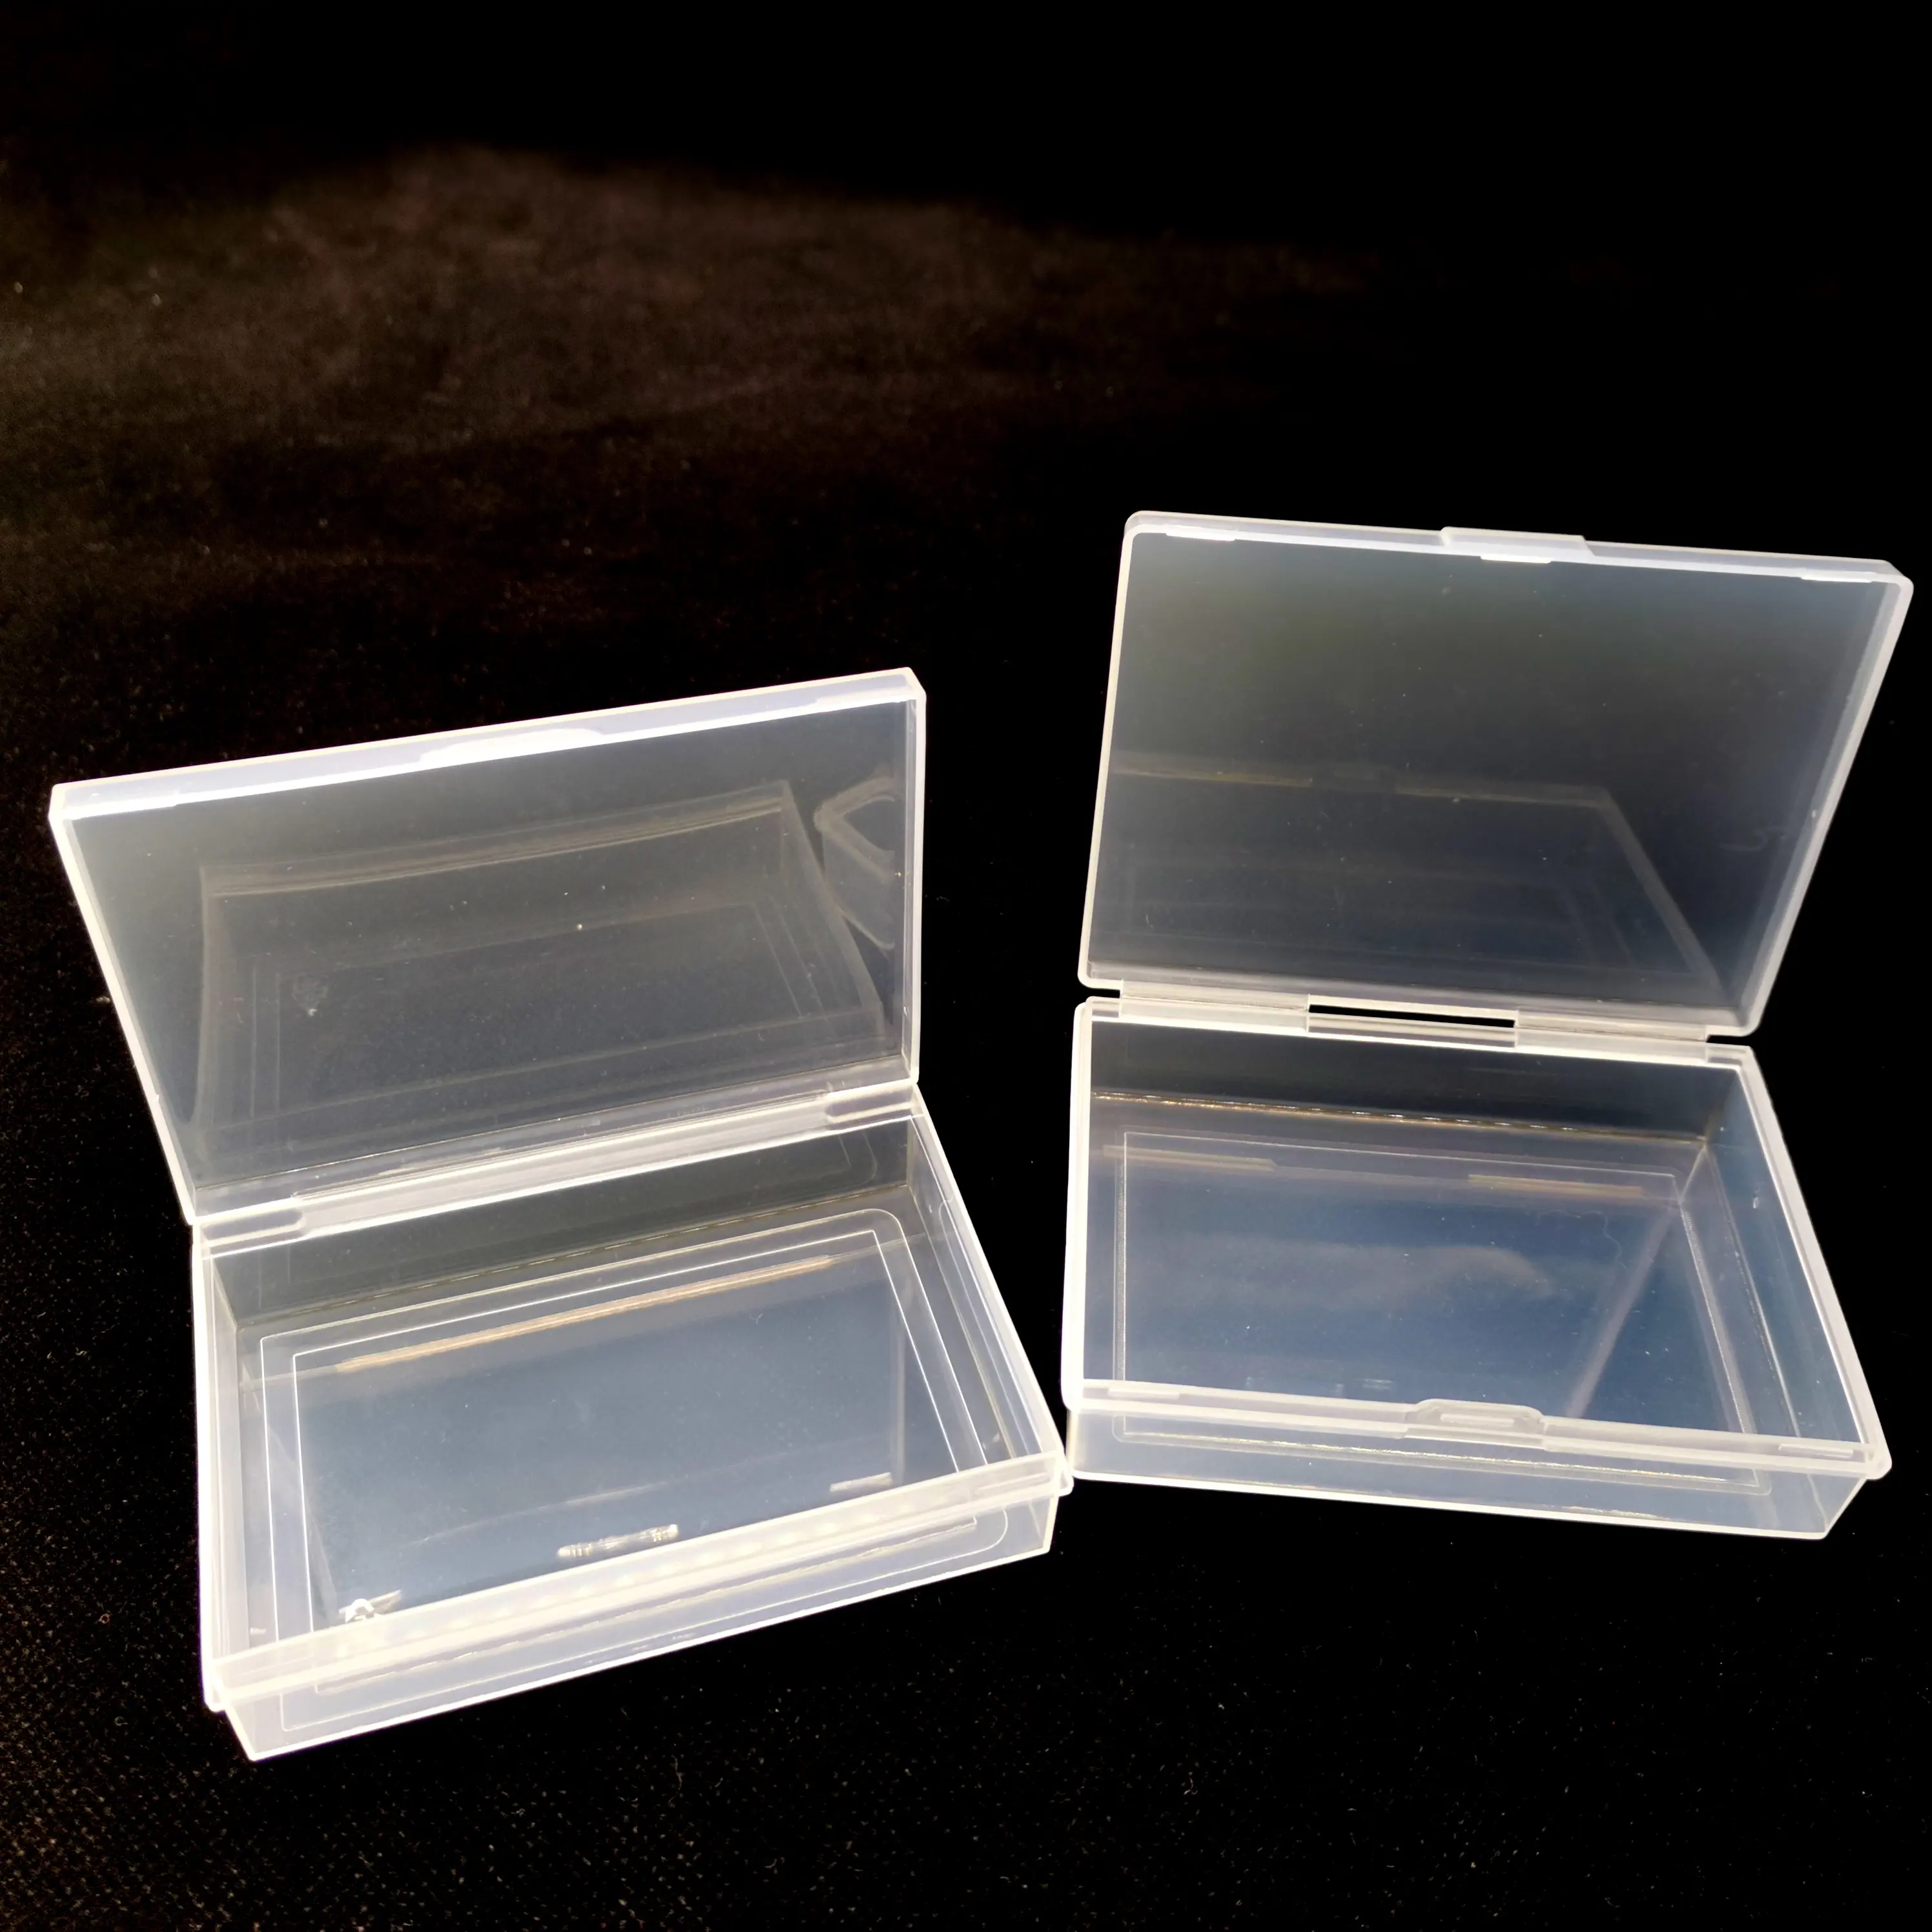 9.5*6.9* 2.4 cm compact convenient accept customized PP material plastic box